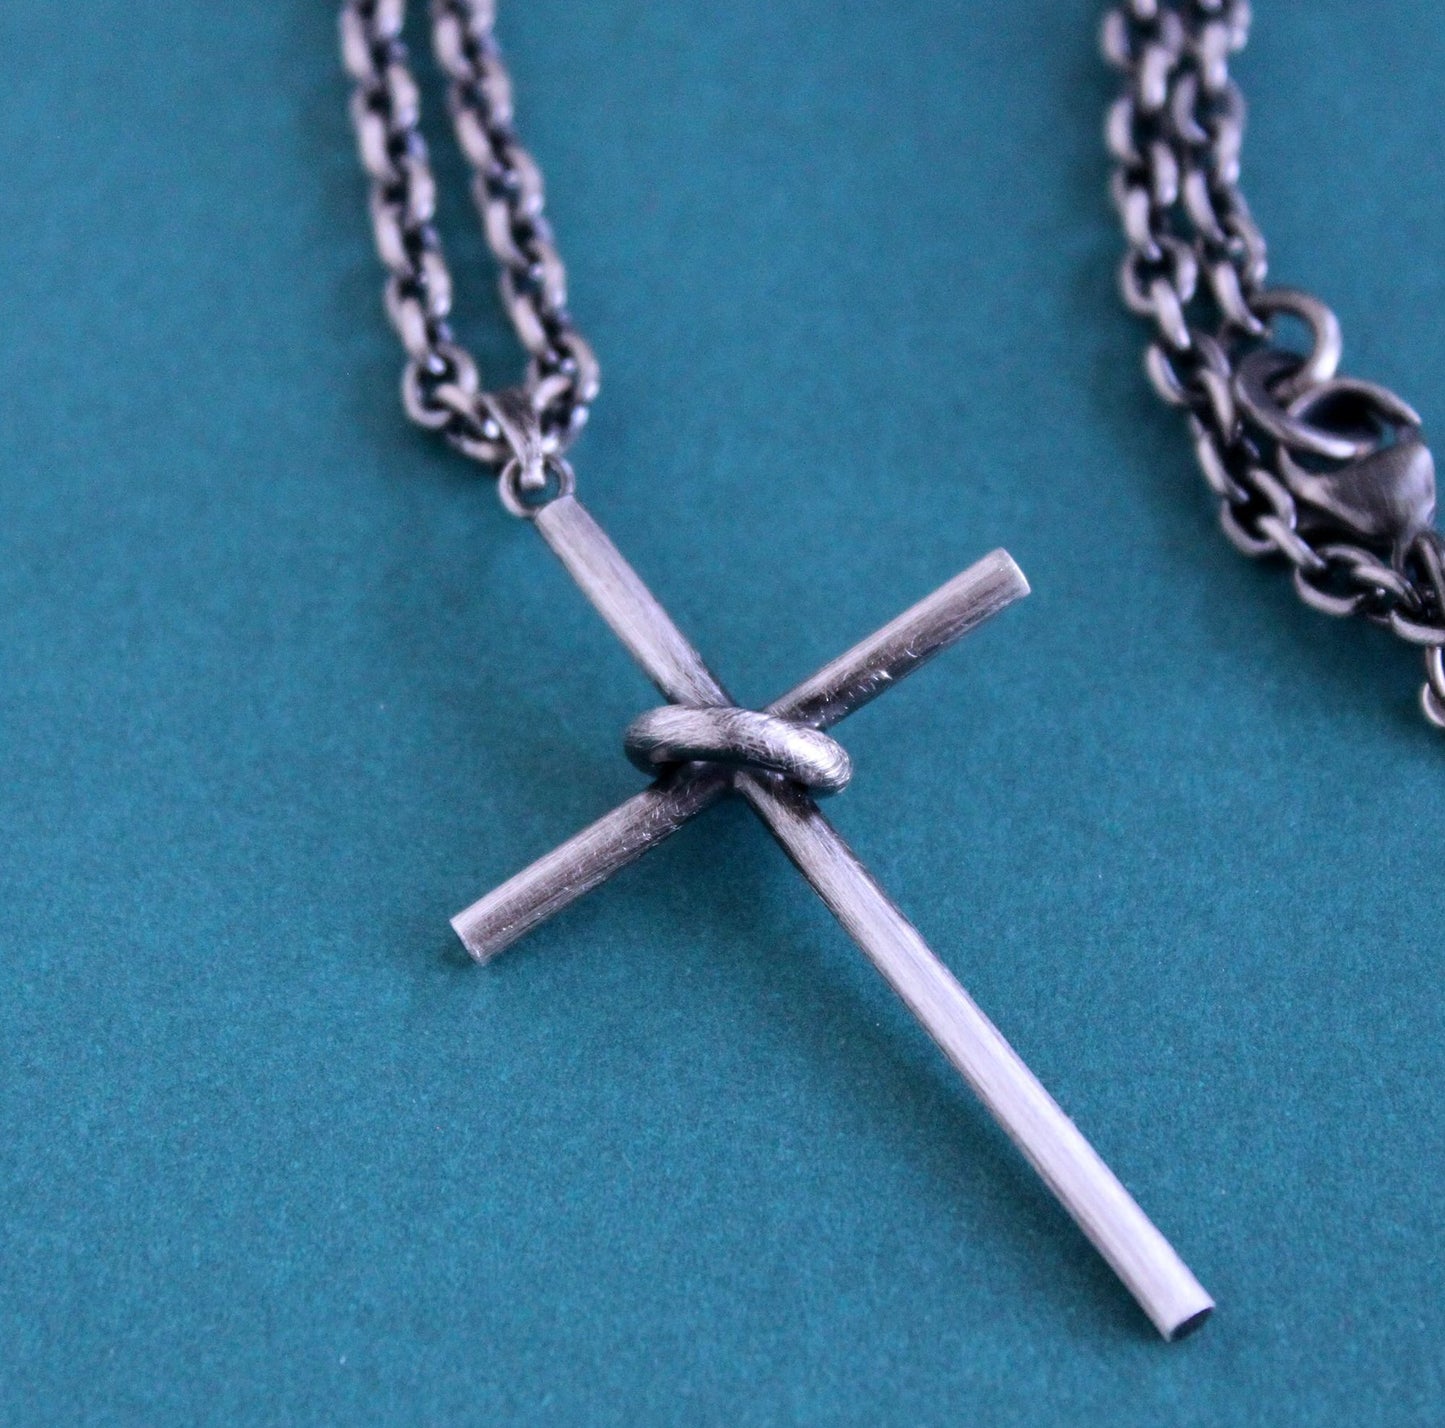 Silver Cross Pendant with Hoop